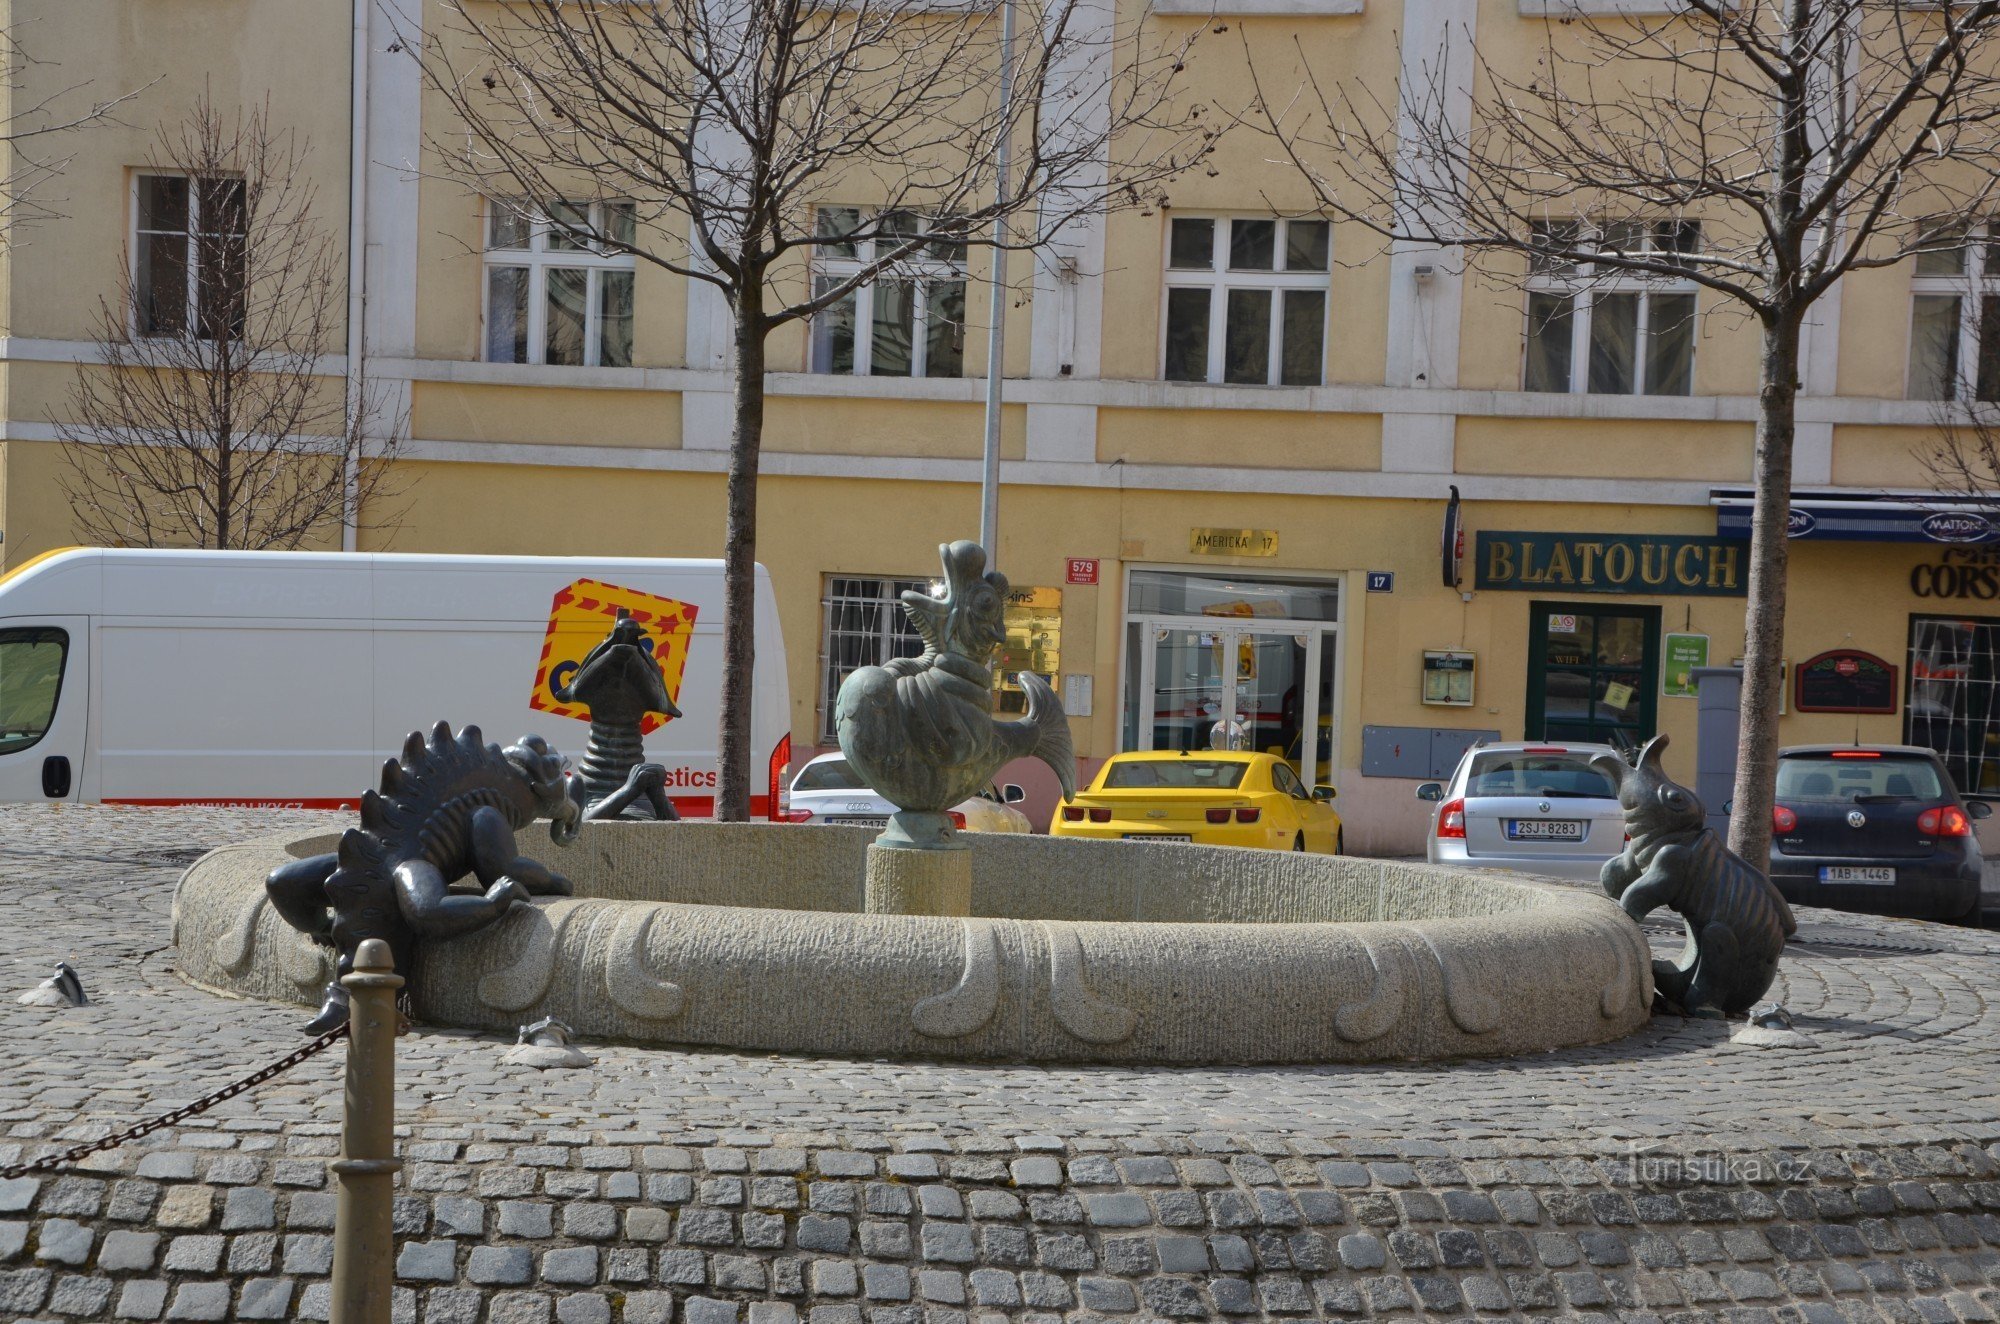 Prag - Modern fontän på rondellen